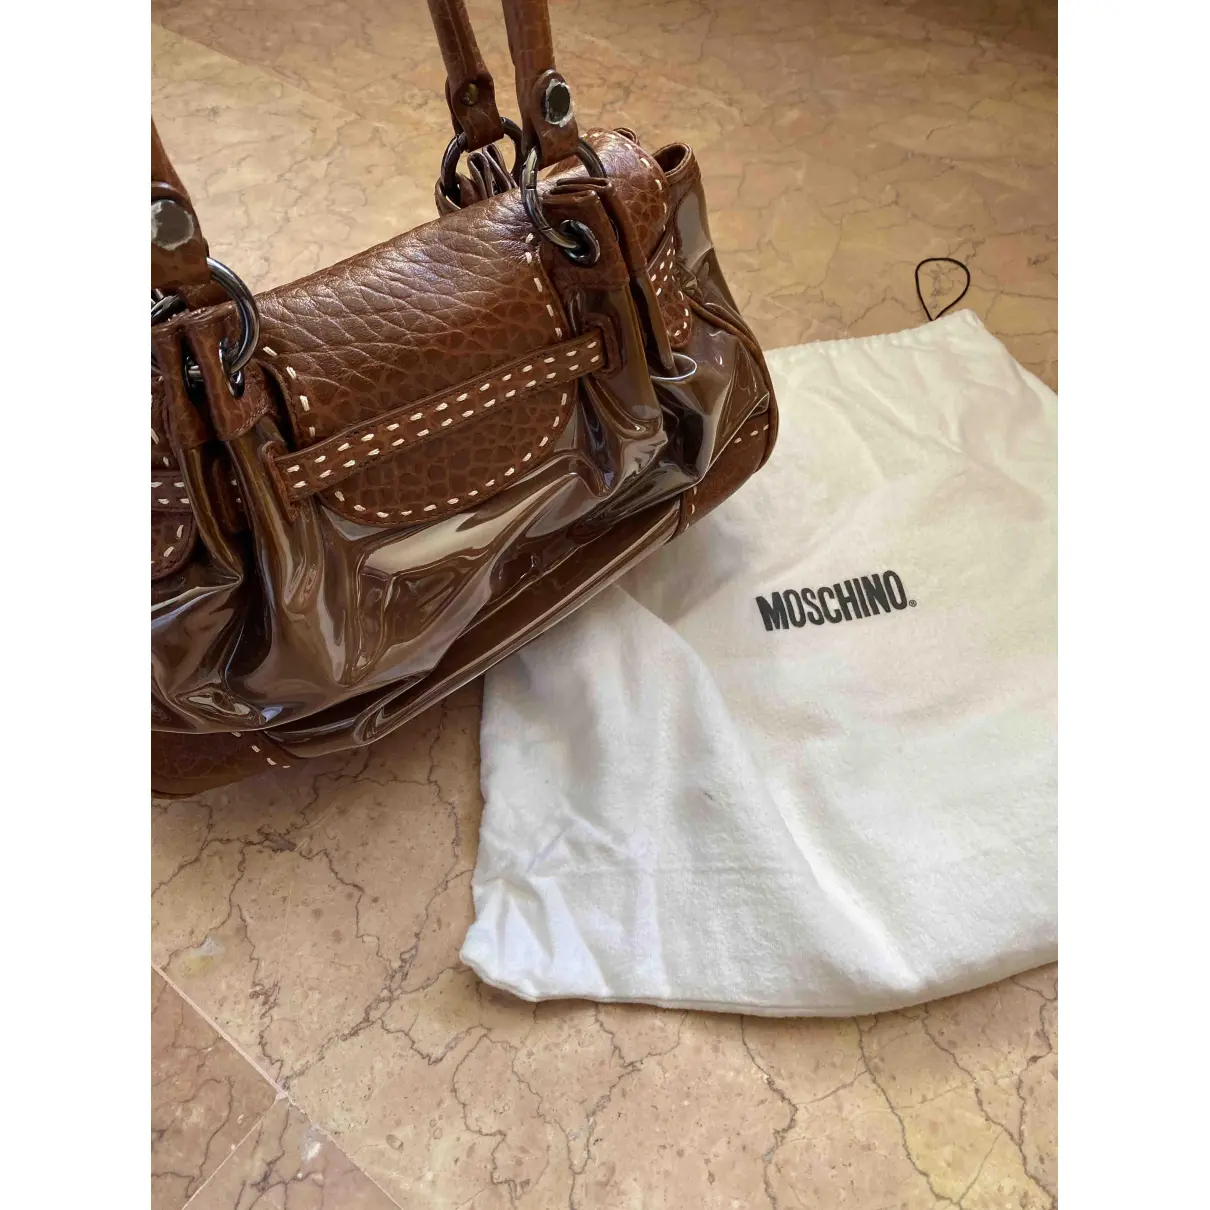 Buy Moschino Patent leather handbag online